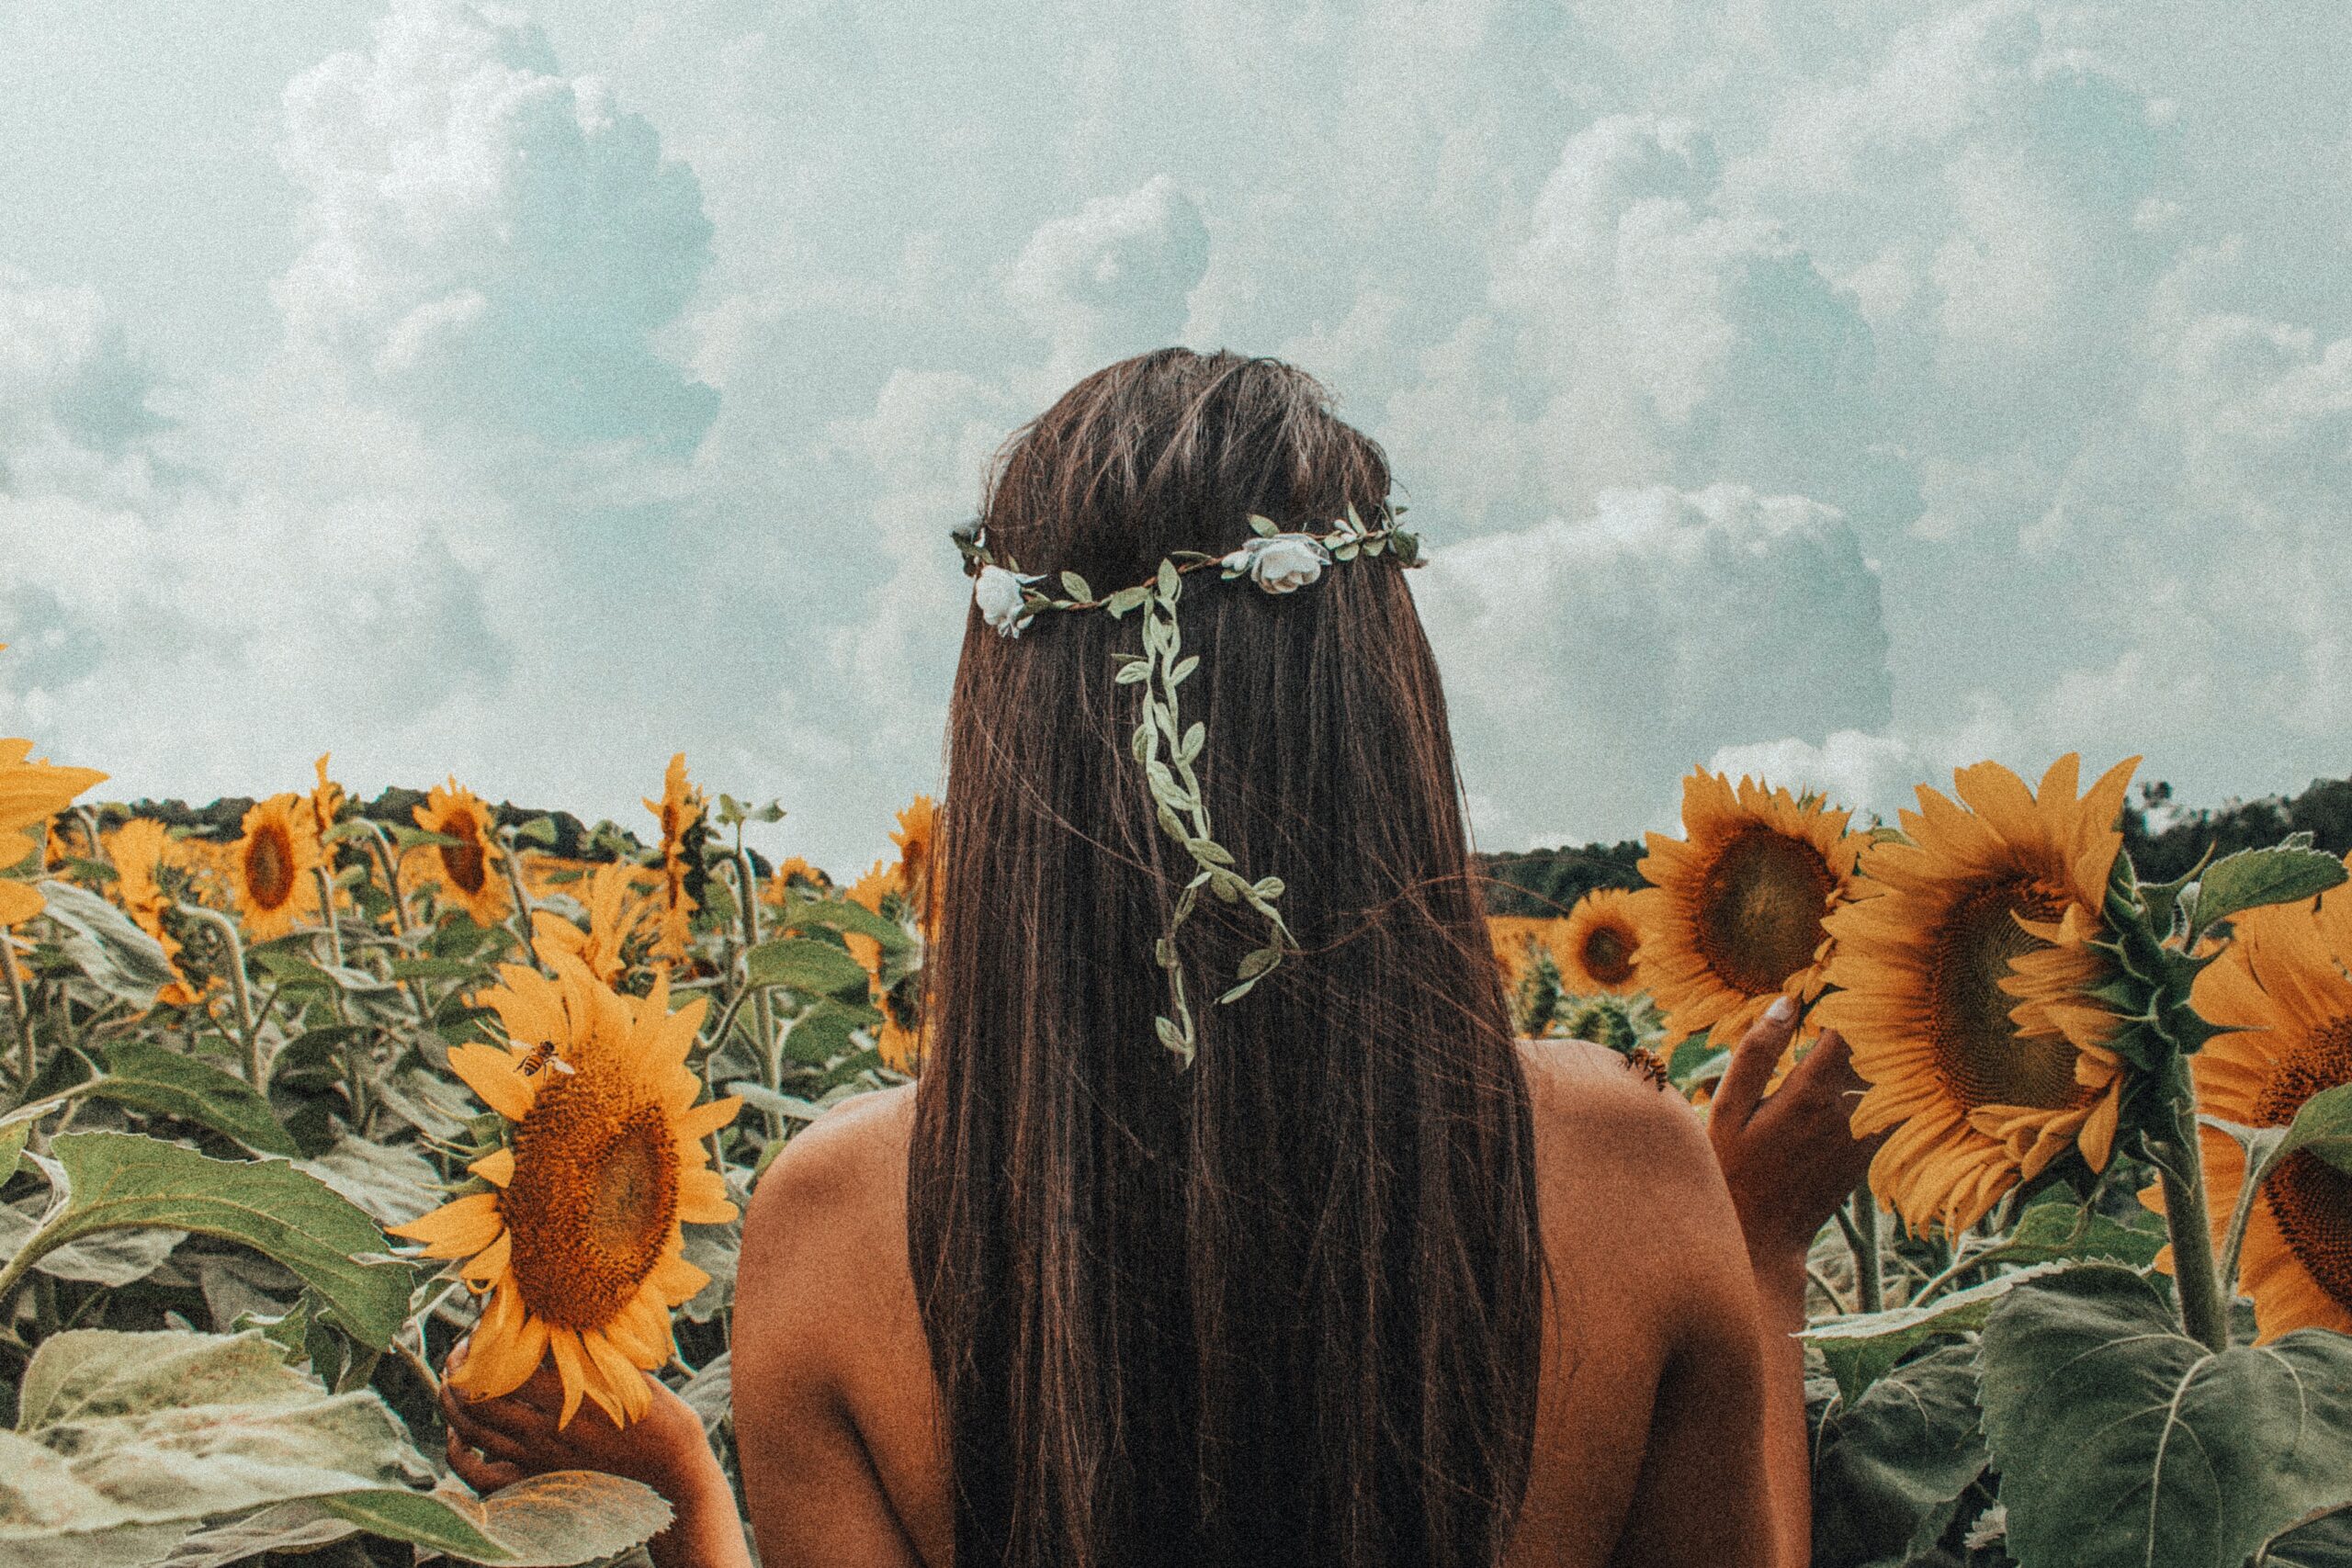 Photo by Designecologist: https://www.pexels.com/photo/woman-standing-on-sunflower-field-2783143/